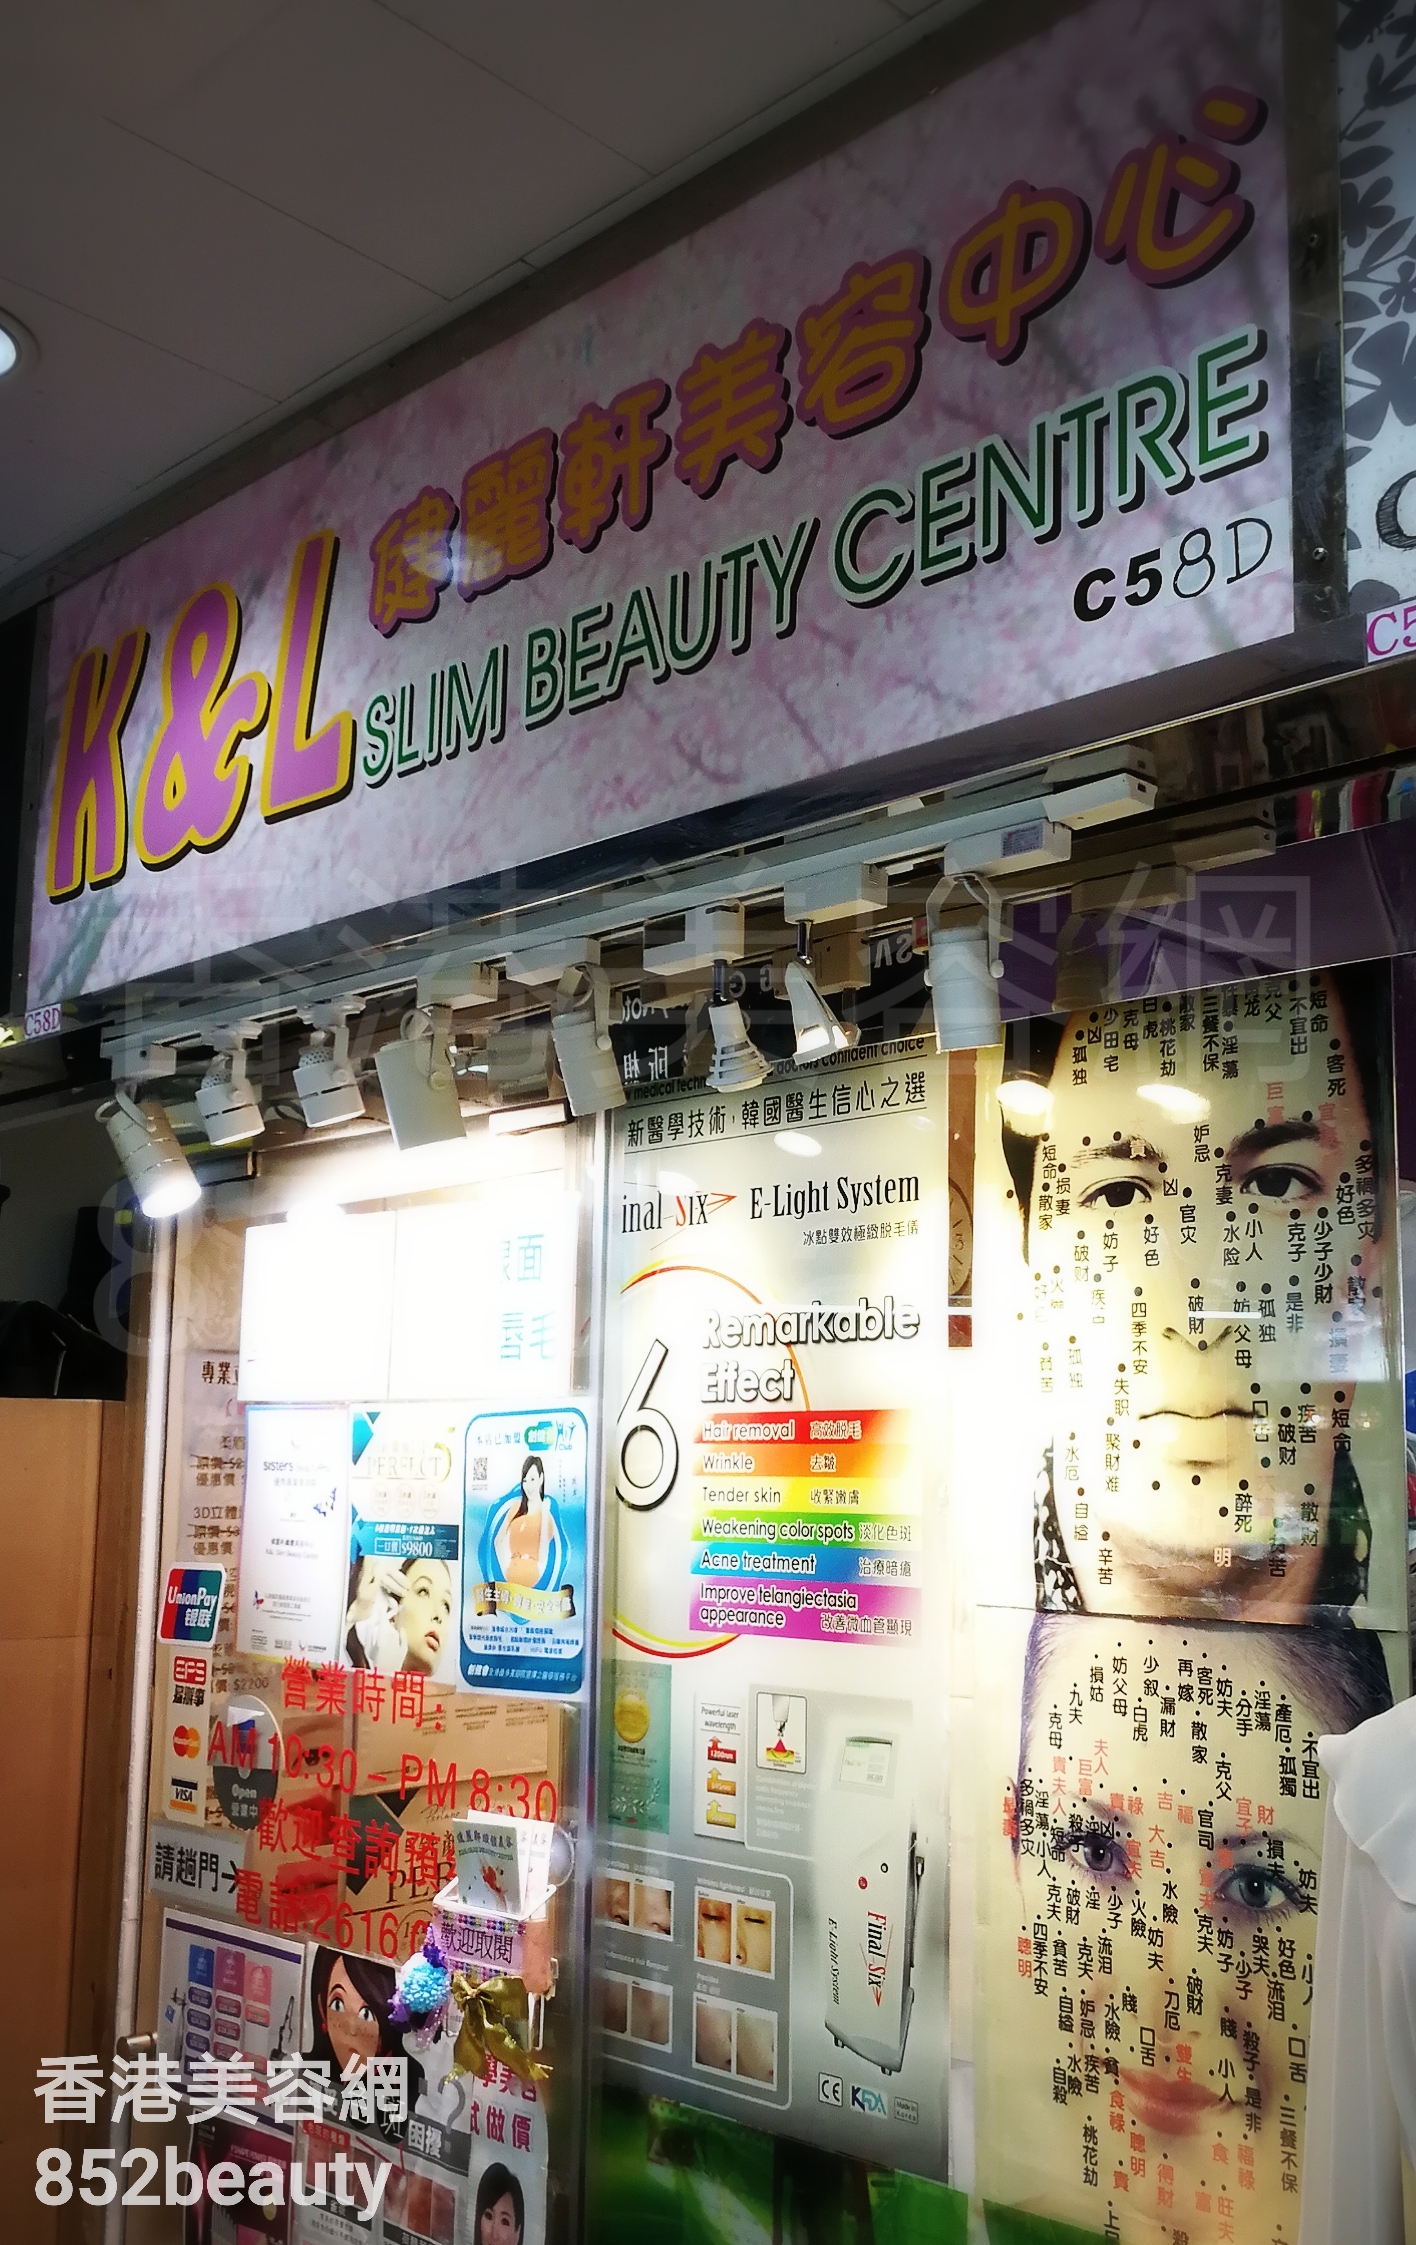 Hair Removal: 健麗軒美容中心 K&L SLIM BEAUTY CENTRE